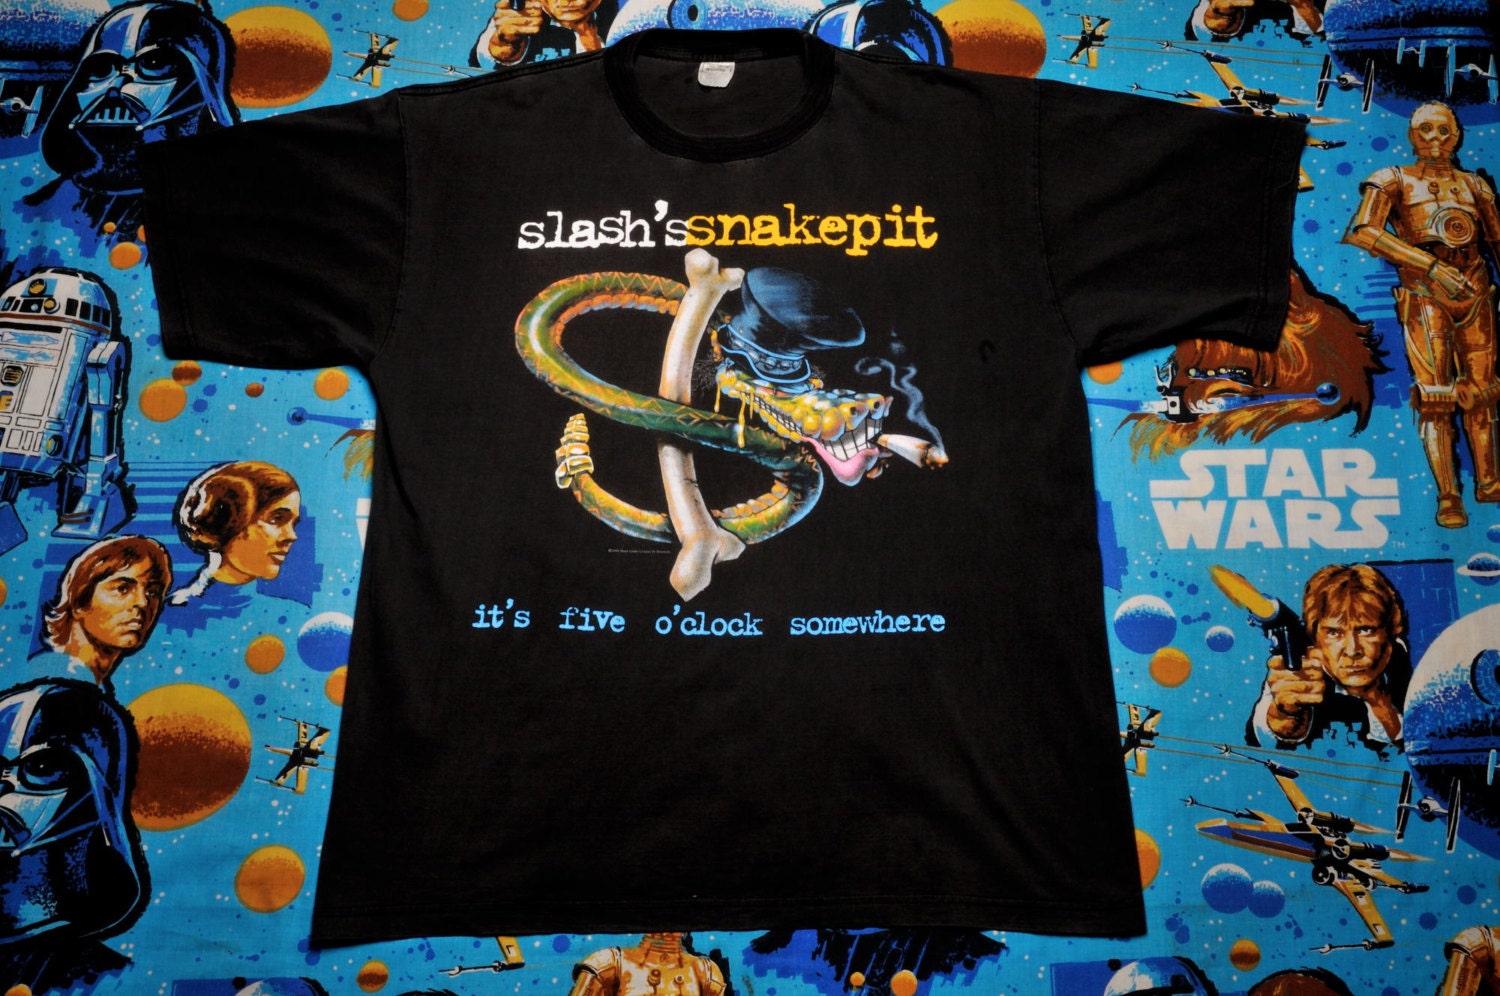 Slash's Snakepit Tour T-Shirt XL